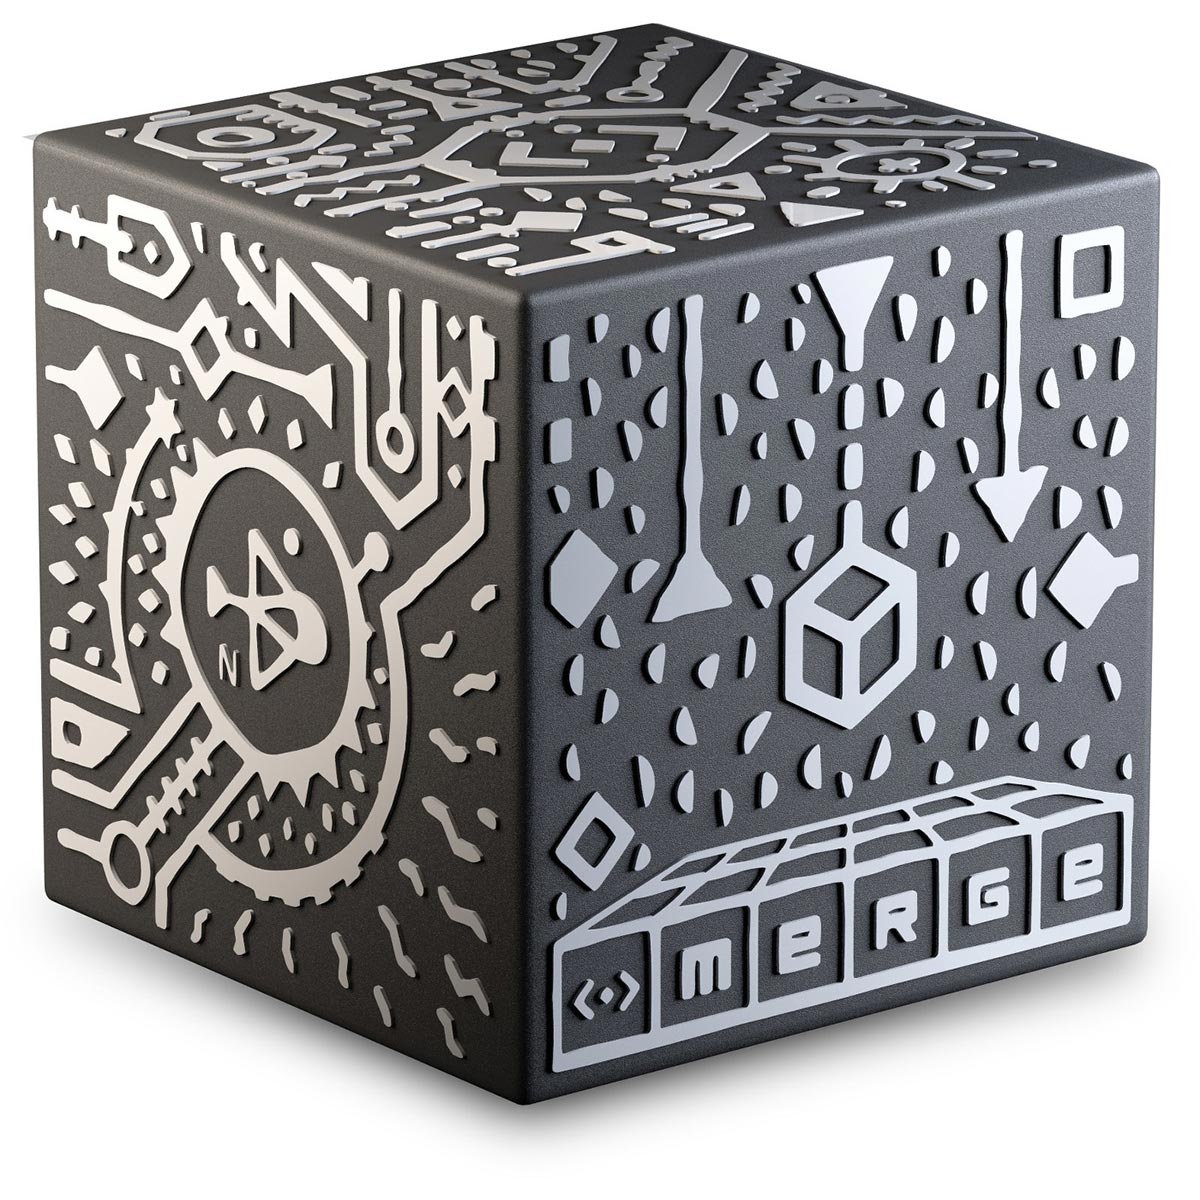 3d Printable Merge Cube